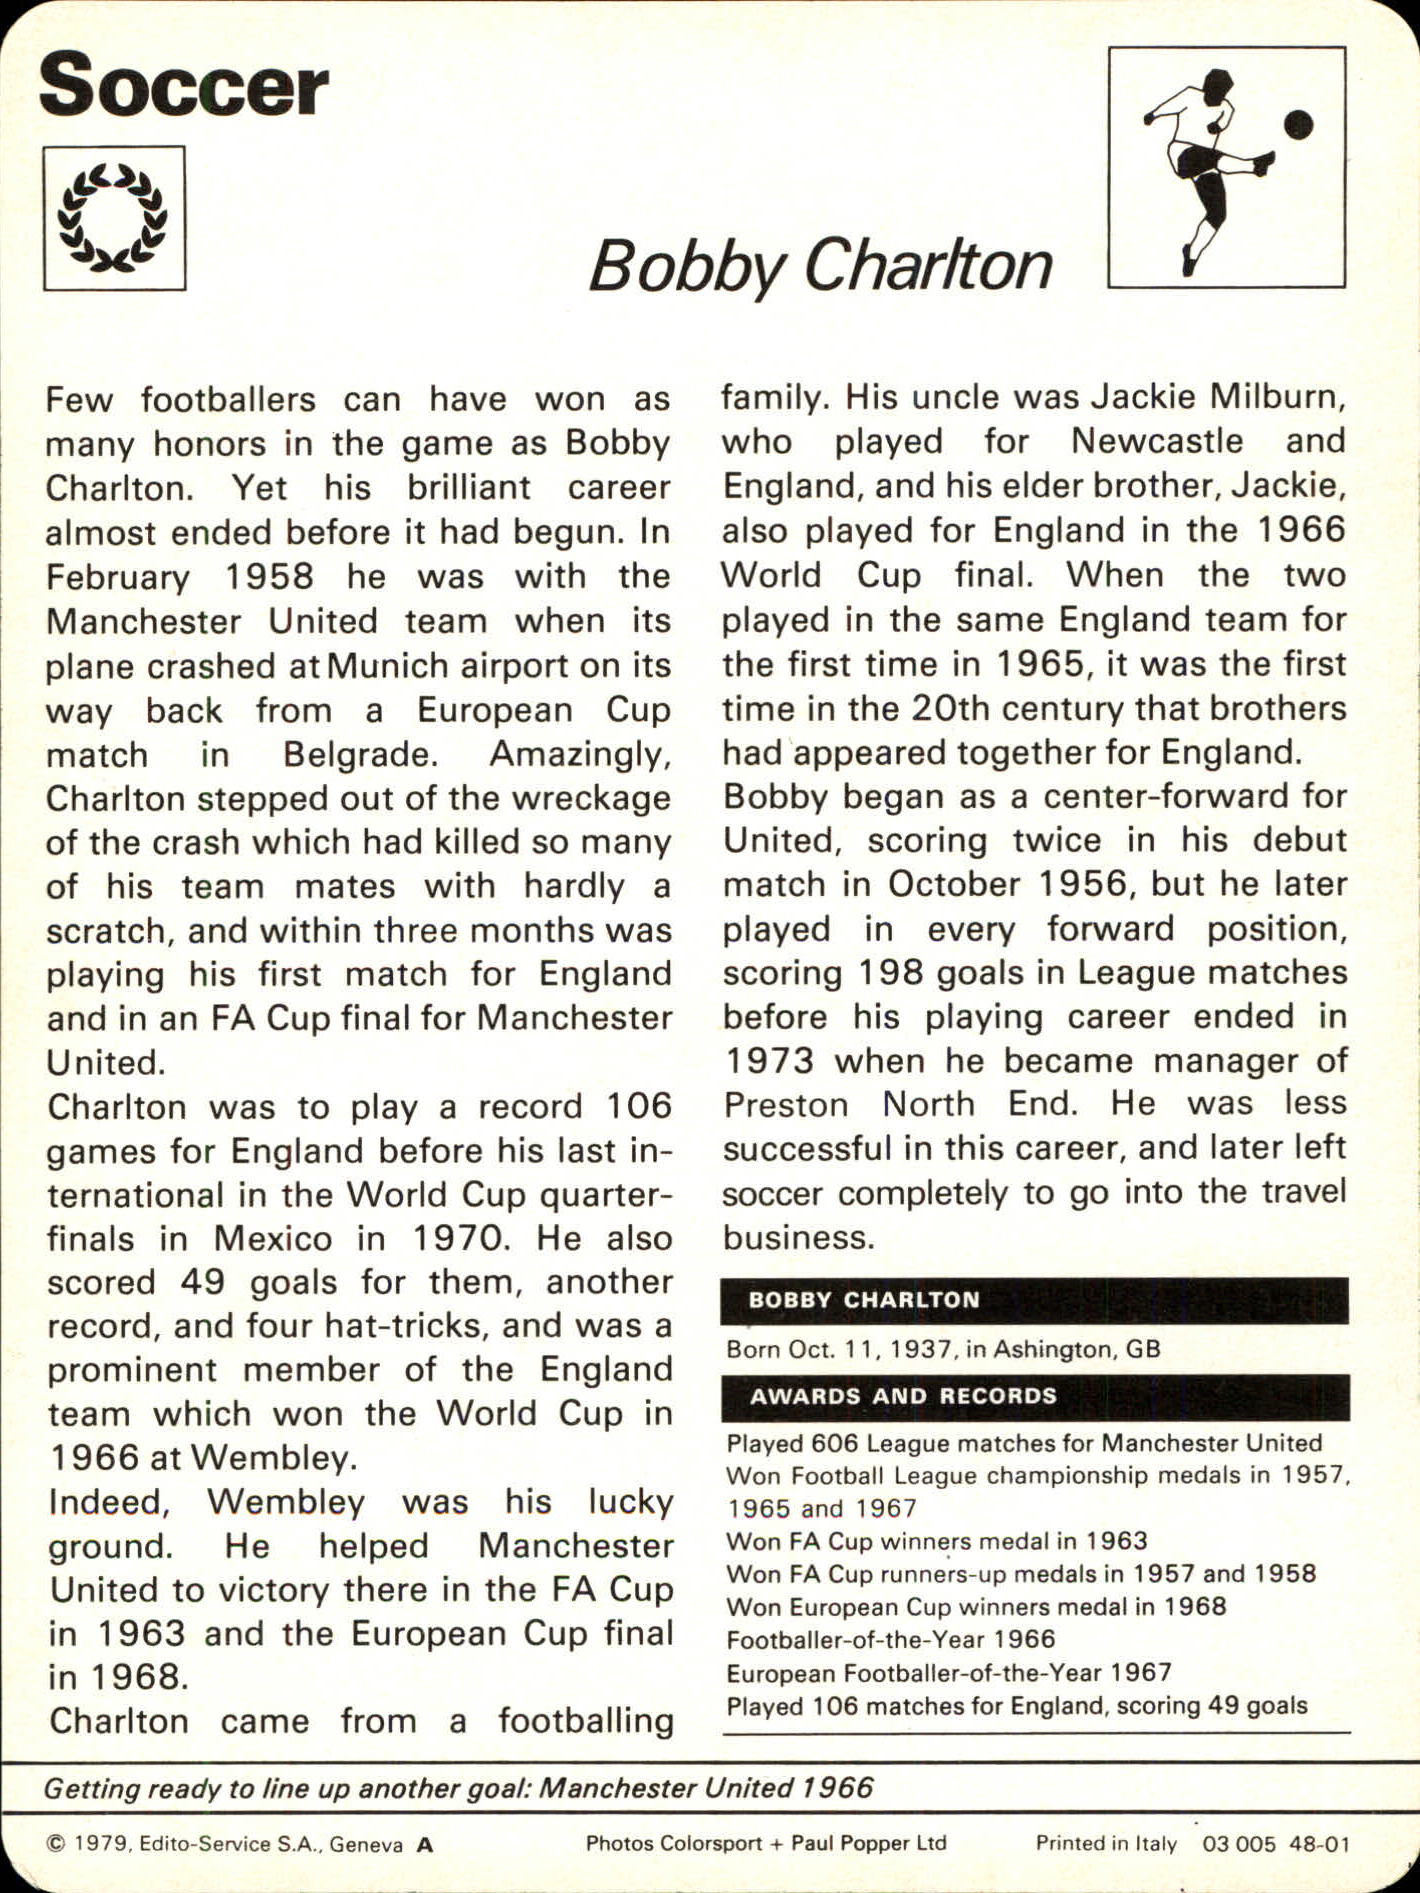 1977-79 Sportscaster Series 48 #4801 Bobby Charlton back image